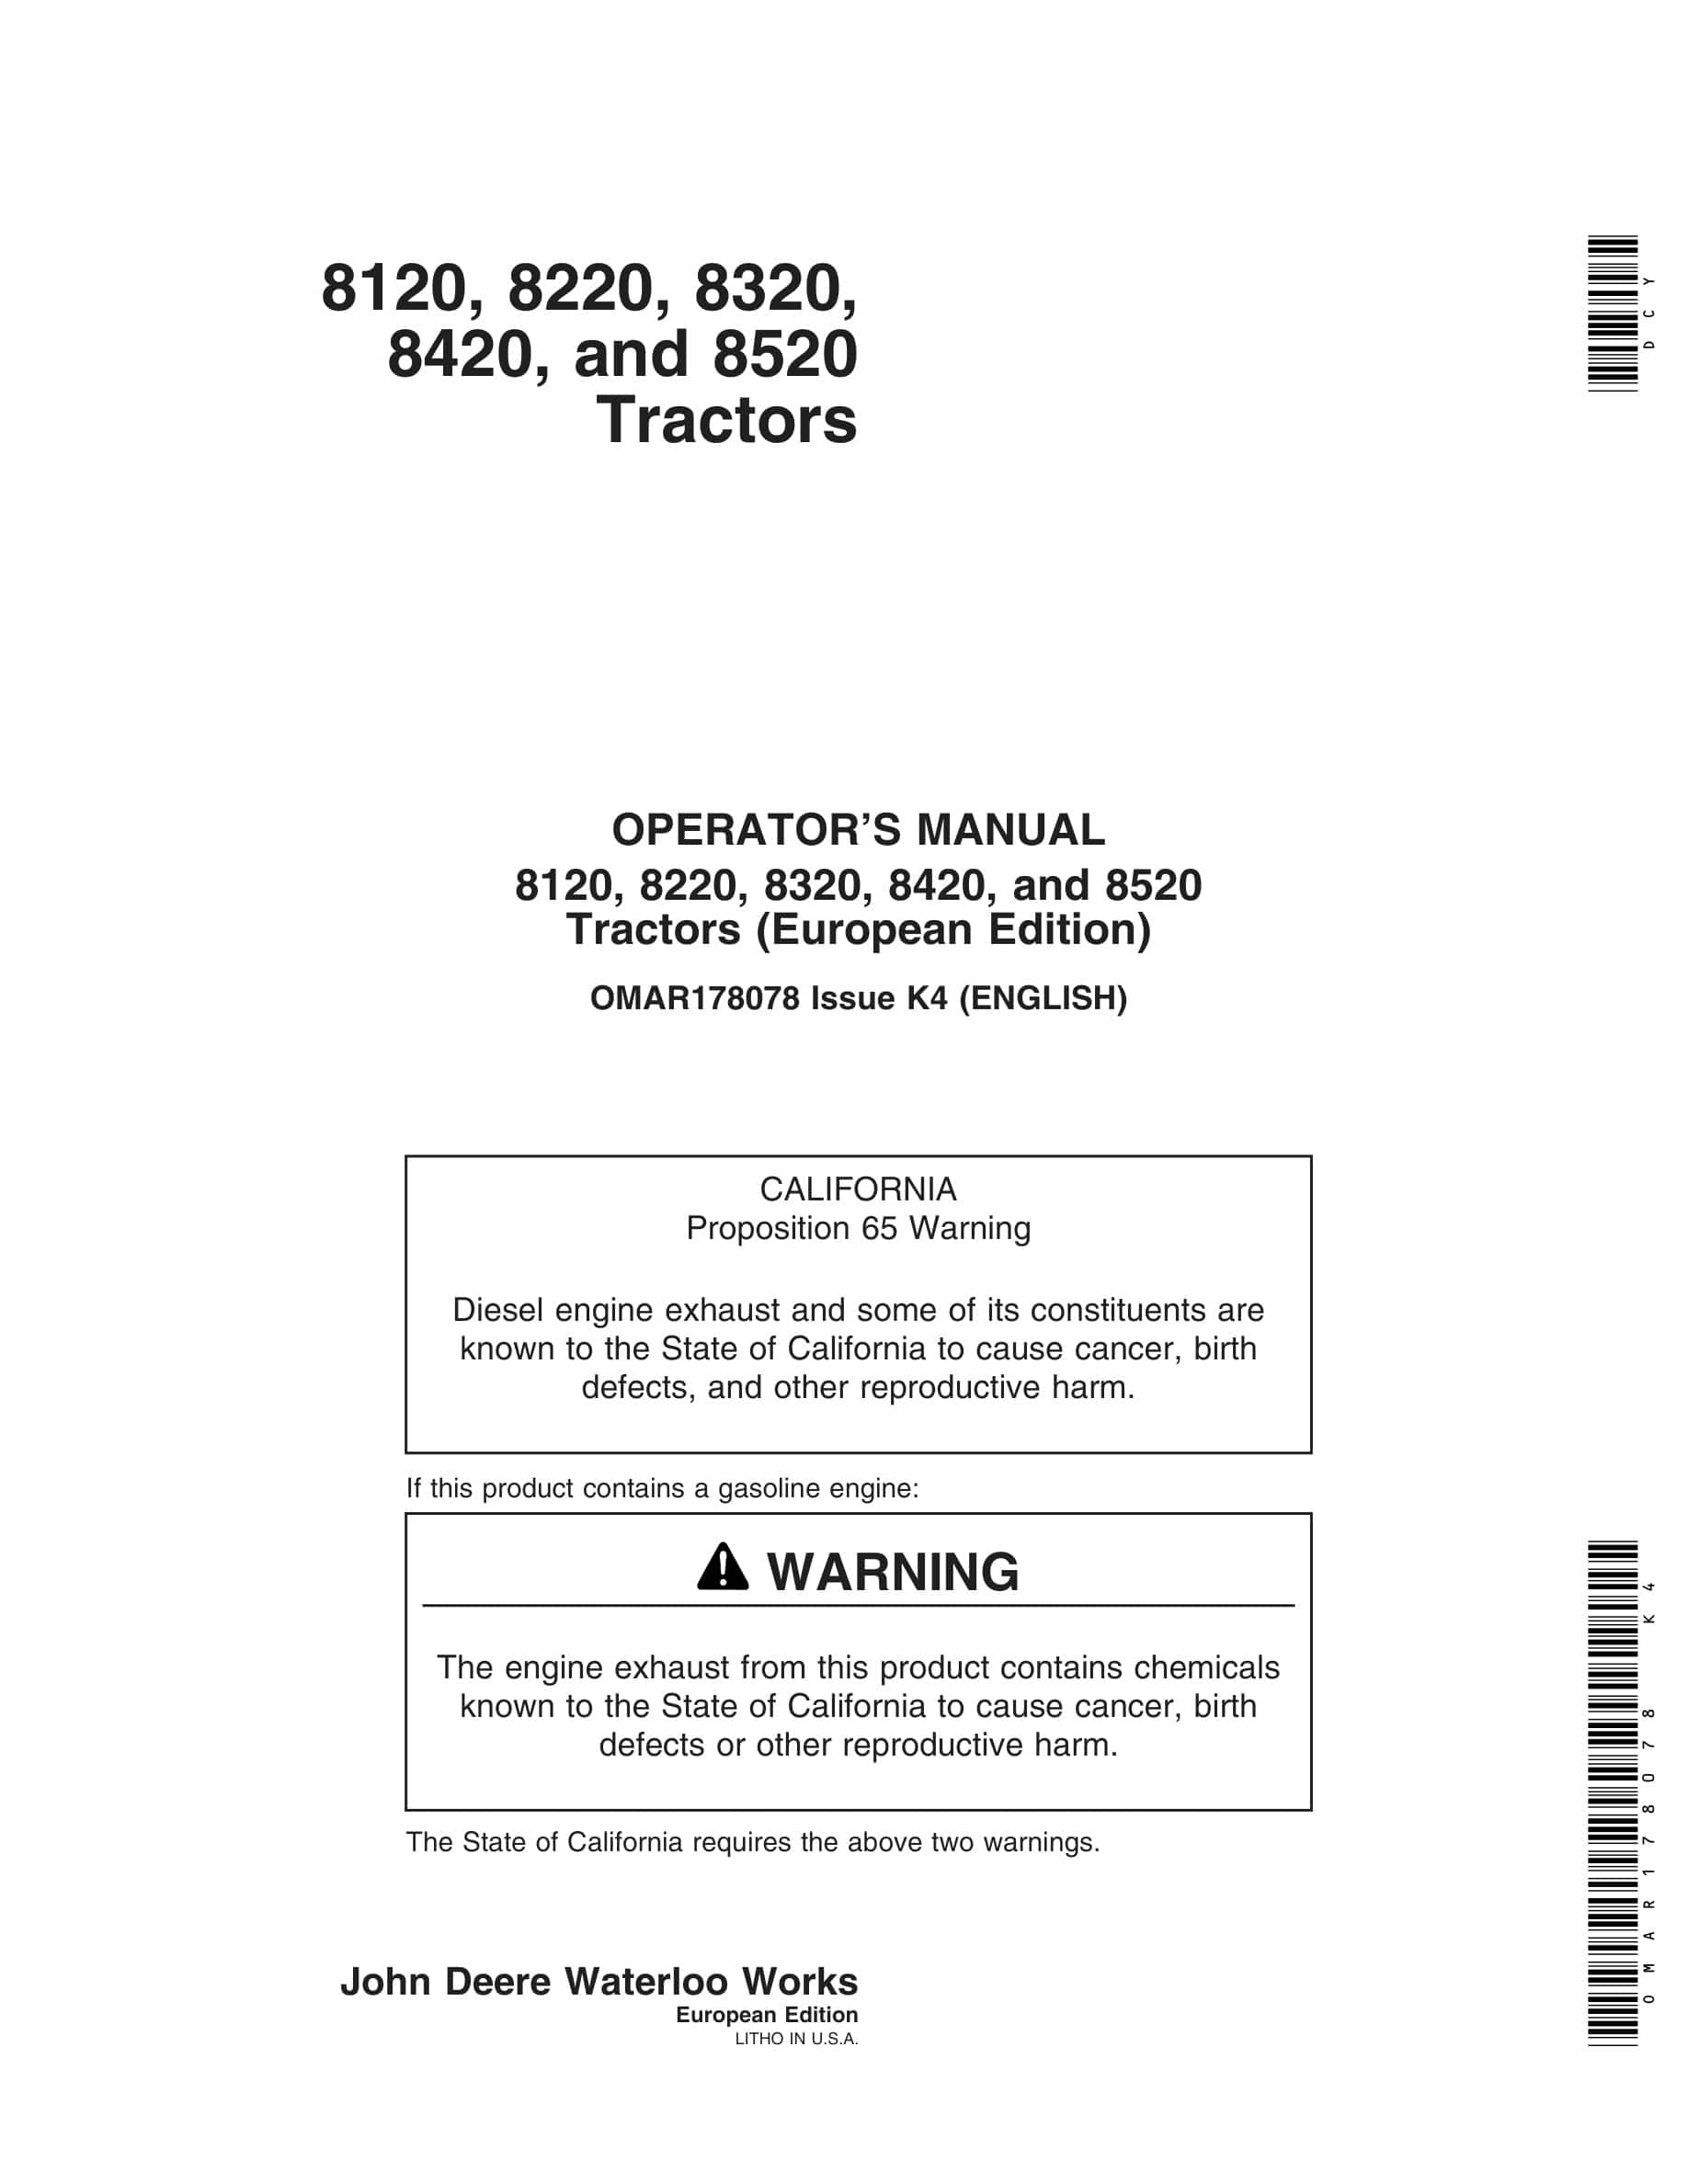 John Deere 8120, 8220, 8320, 8420, And 8520 Tractors Operator Manuals OMAR178078-1